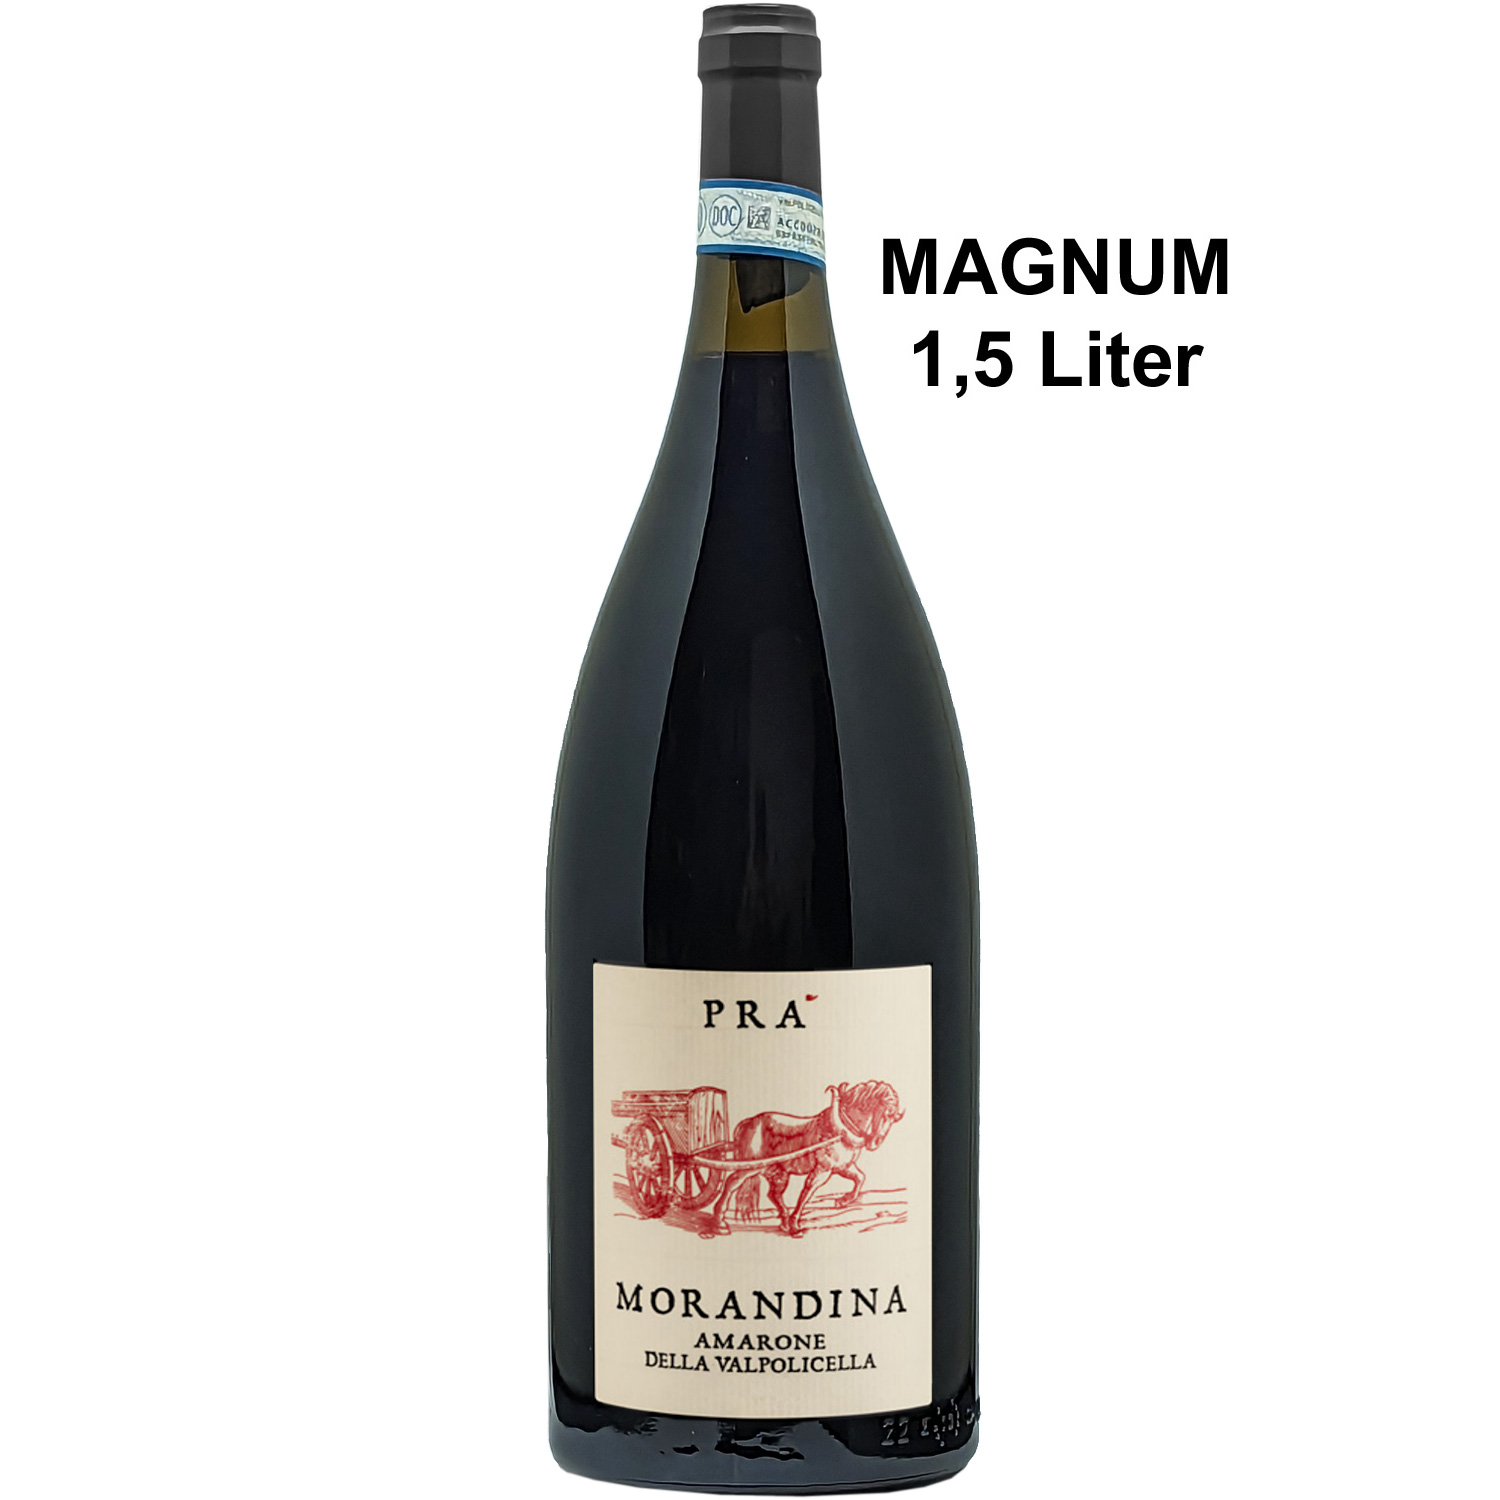 Italienischer Rotwein Morandina Amarone | 2016 Magnum Pra Valpolicella della